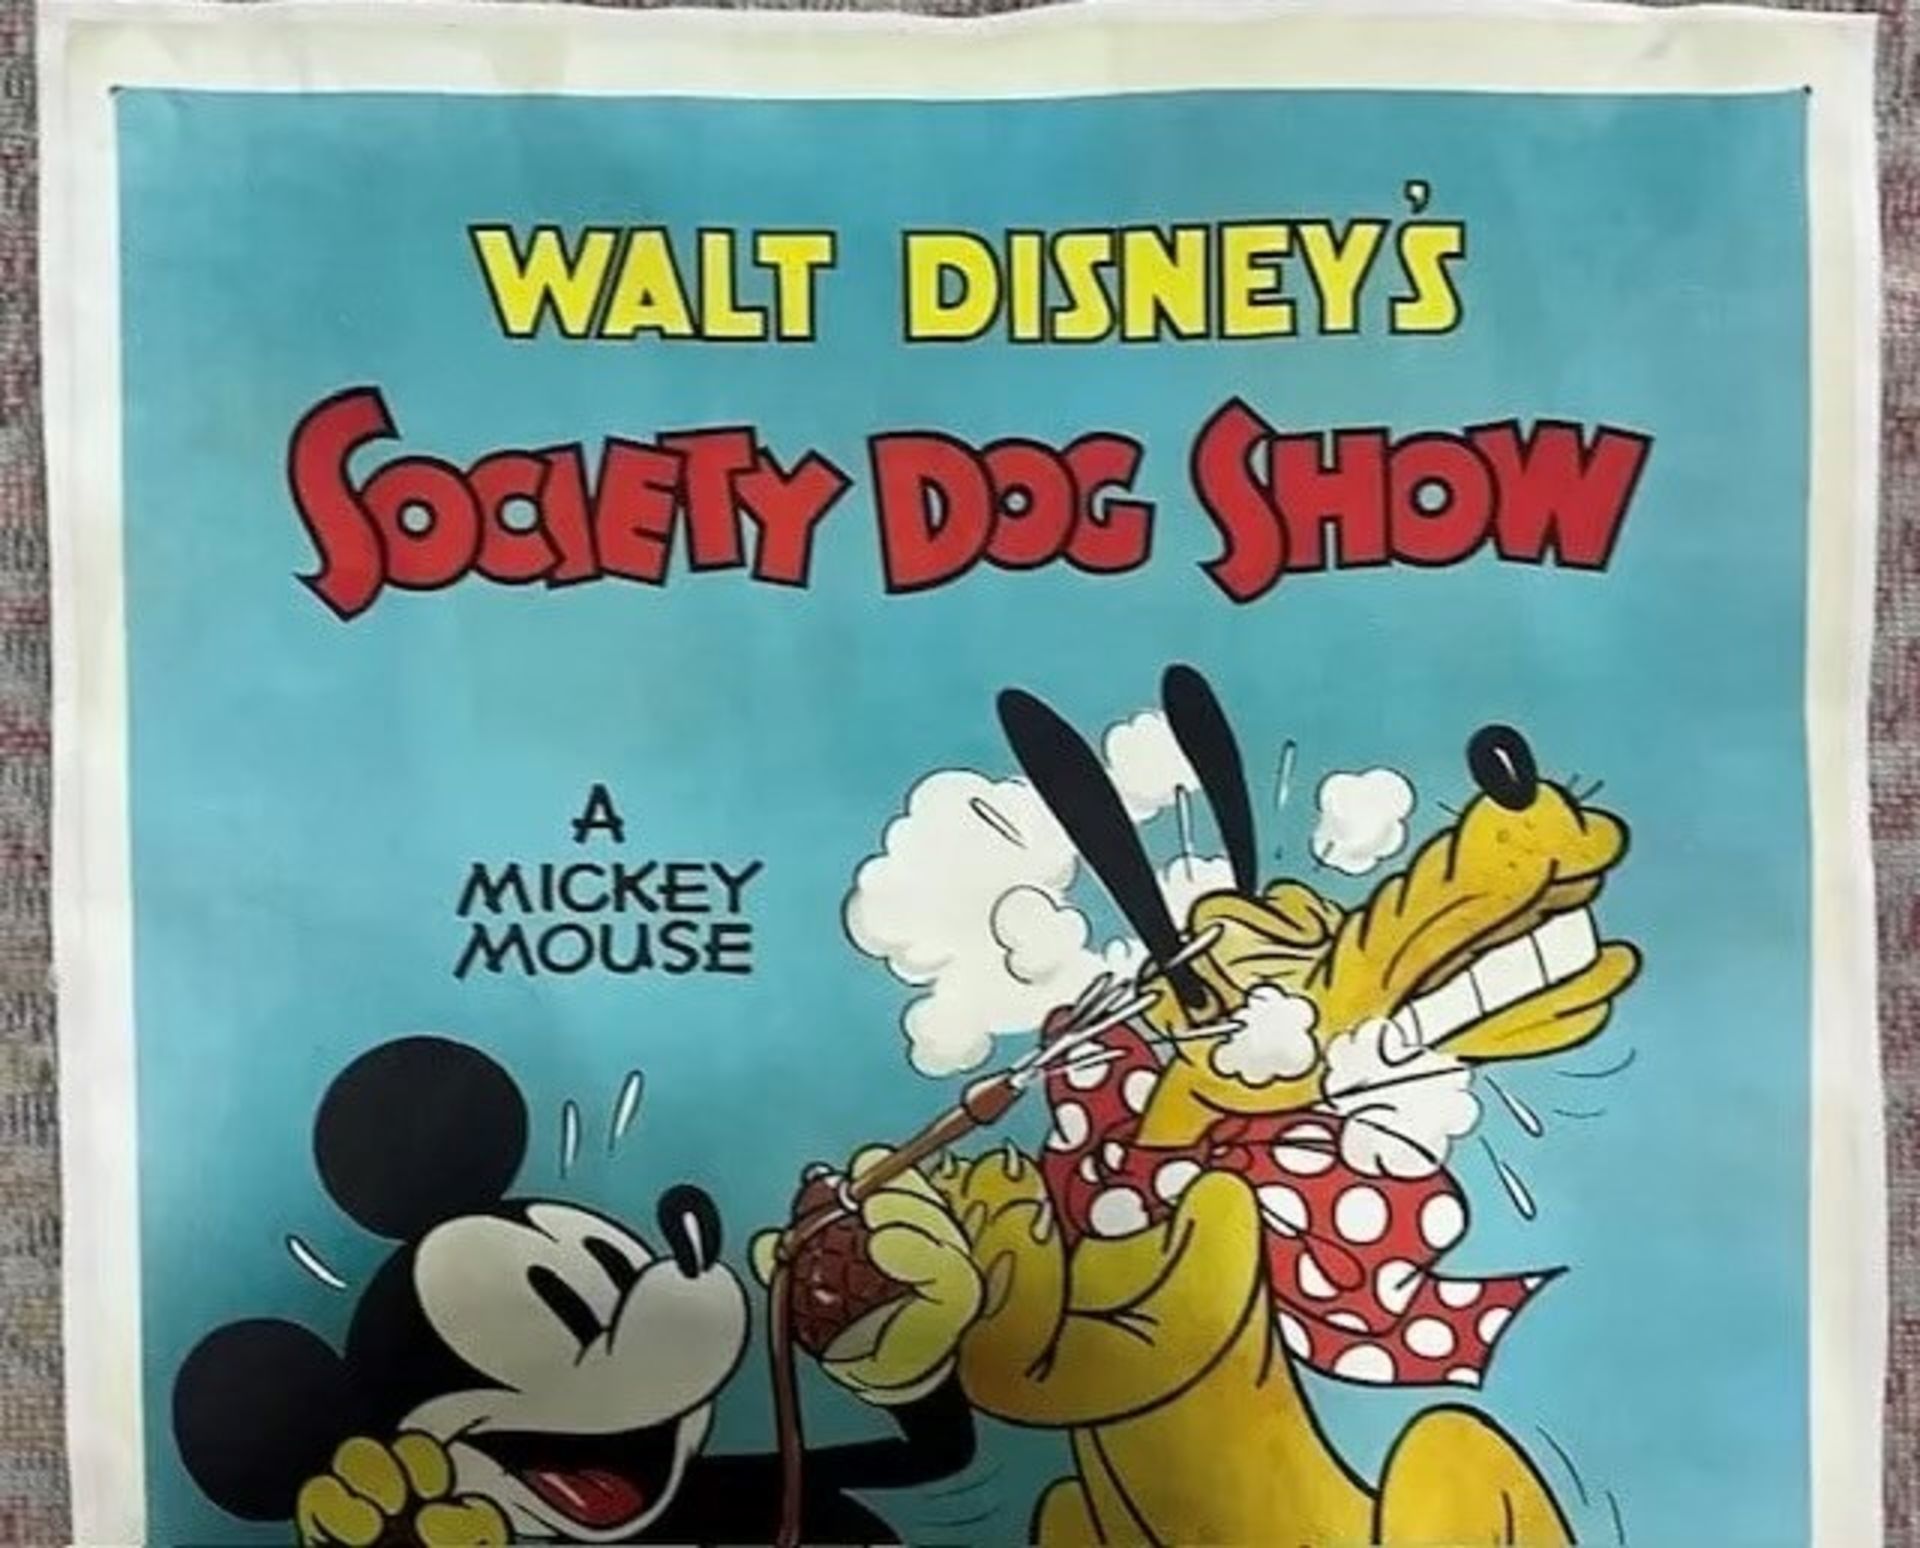 Walt disney Society Dog Poster - Image 2 of 7